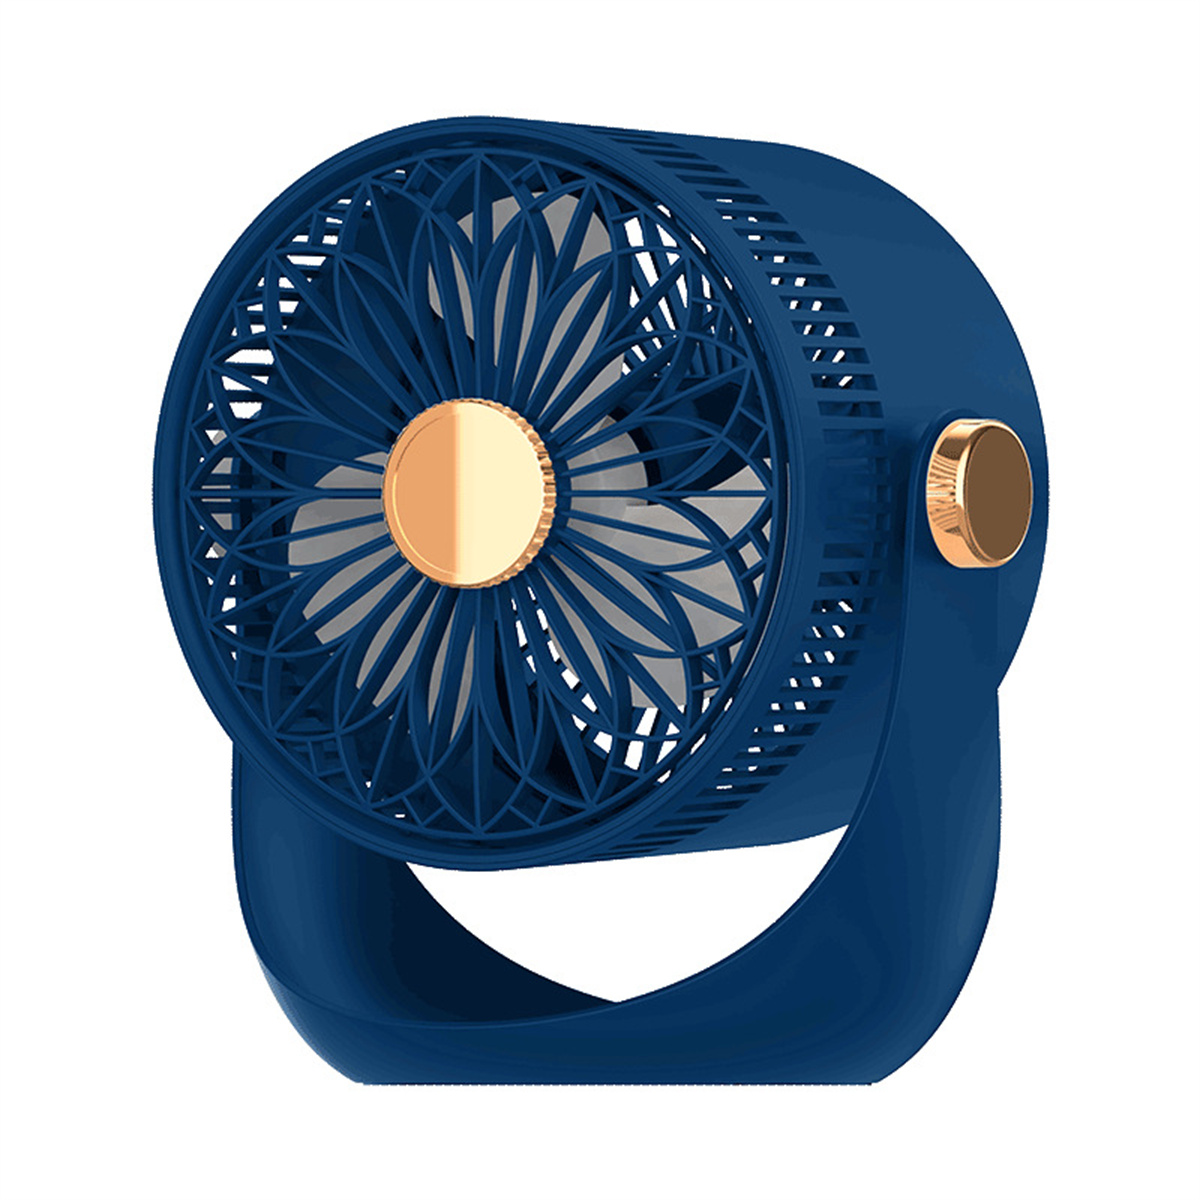 SYNTEK Elektrischer Ventilator Desktop Wandmontage Geschwindigkeiten starker Blau Kompaktventilator Wind 3